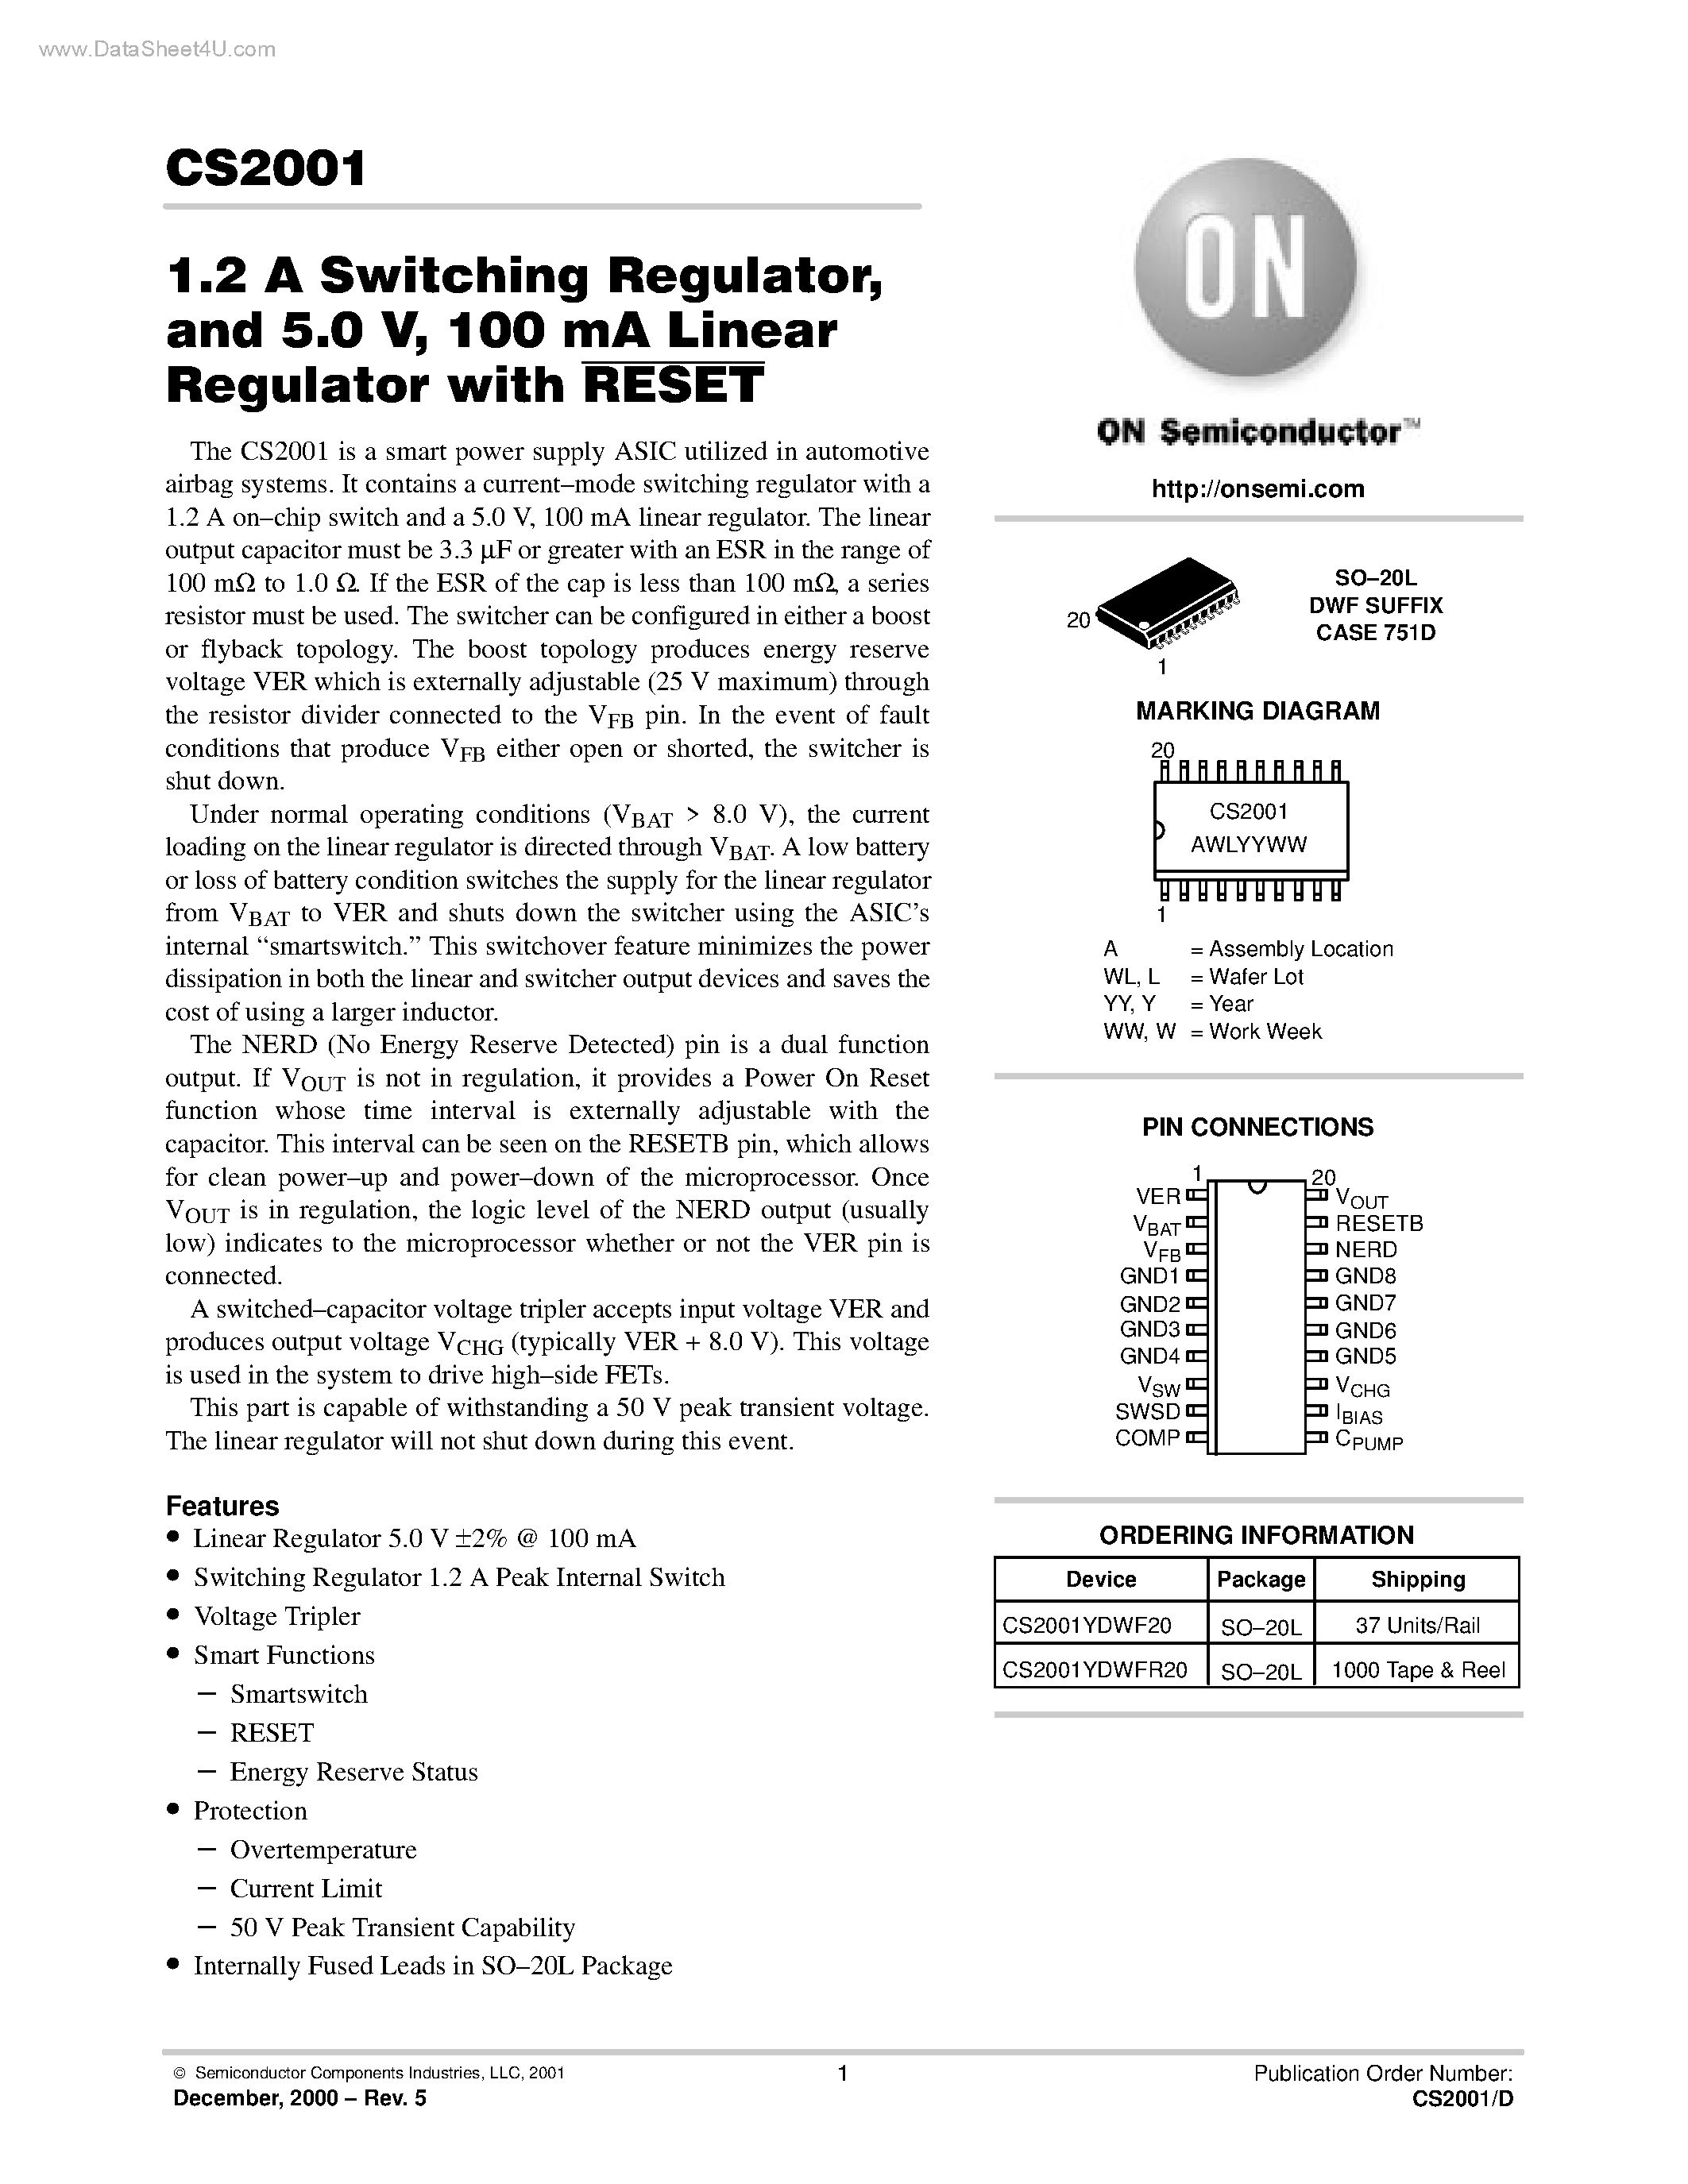 Datasheet CS2001 - 100 mA Linear Regulator page 1